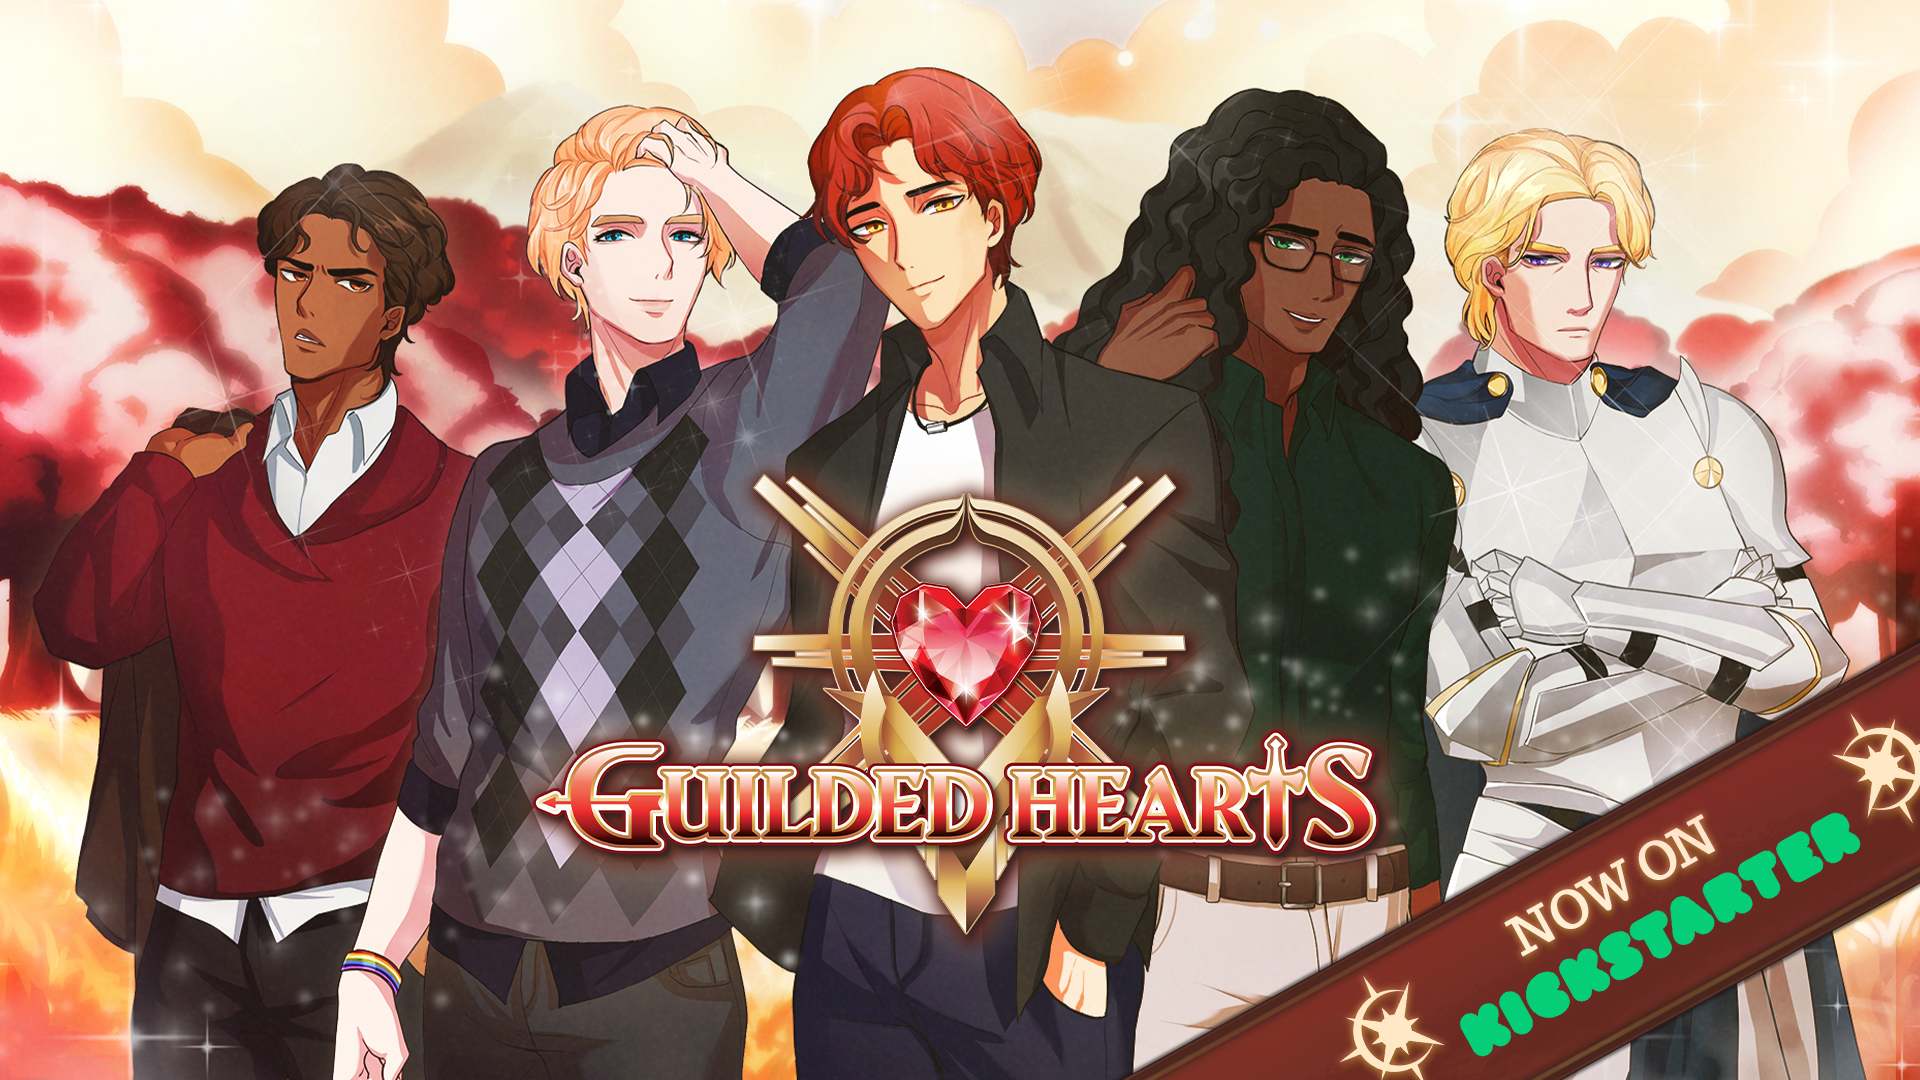 Guilded Hearts key visual now live on Kickstarter!